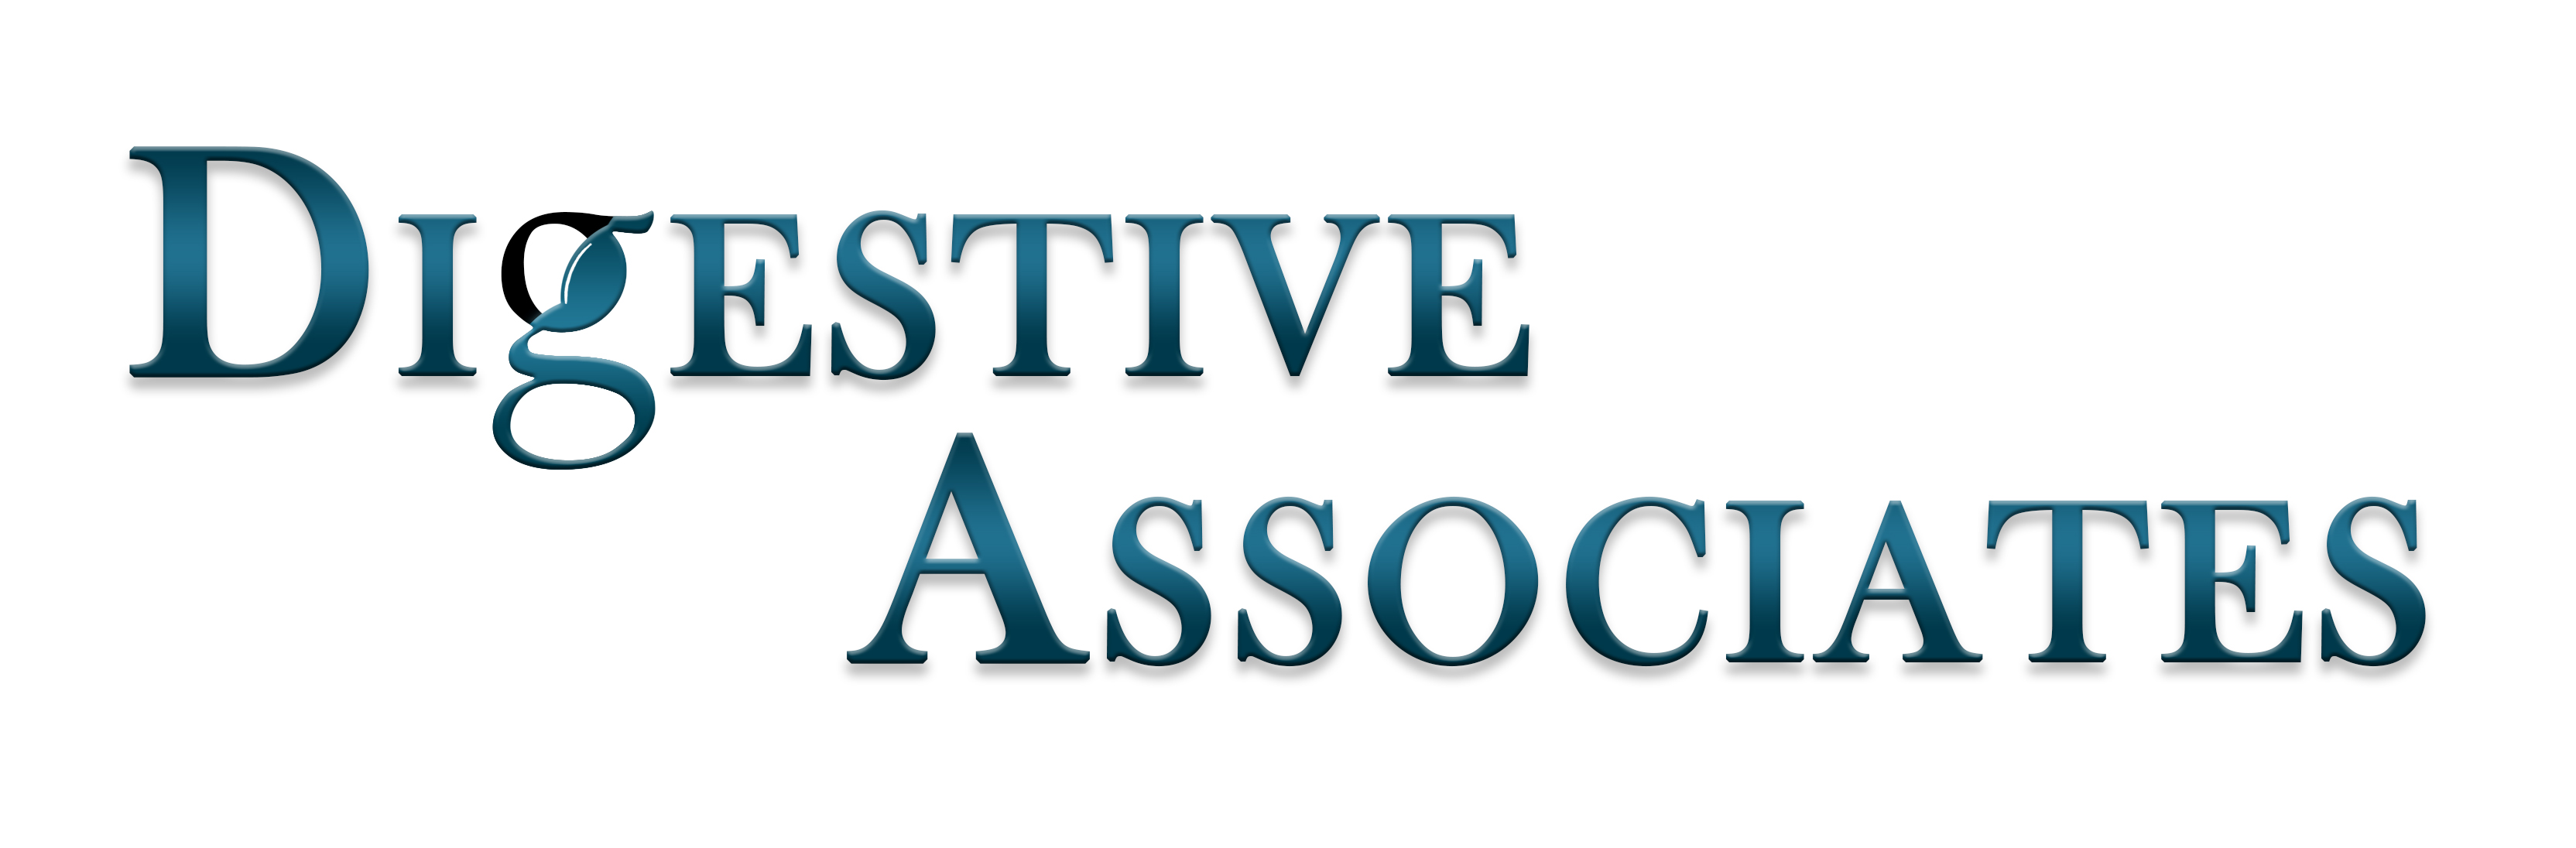 Digestive Associates Logo